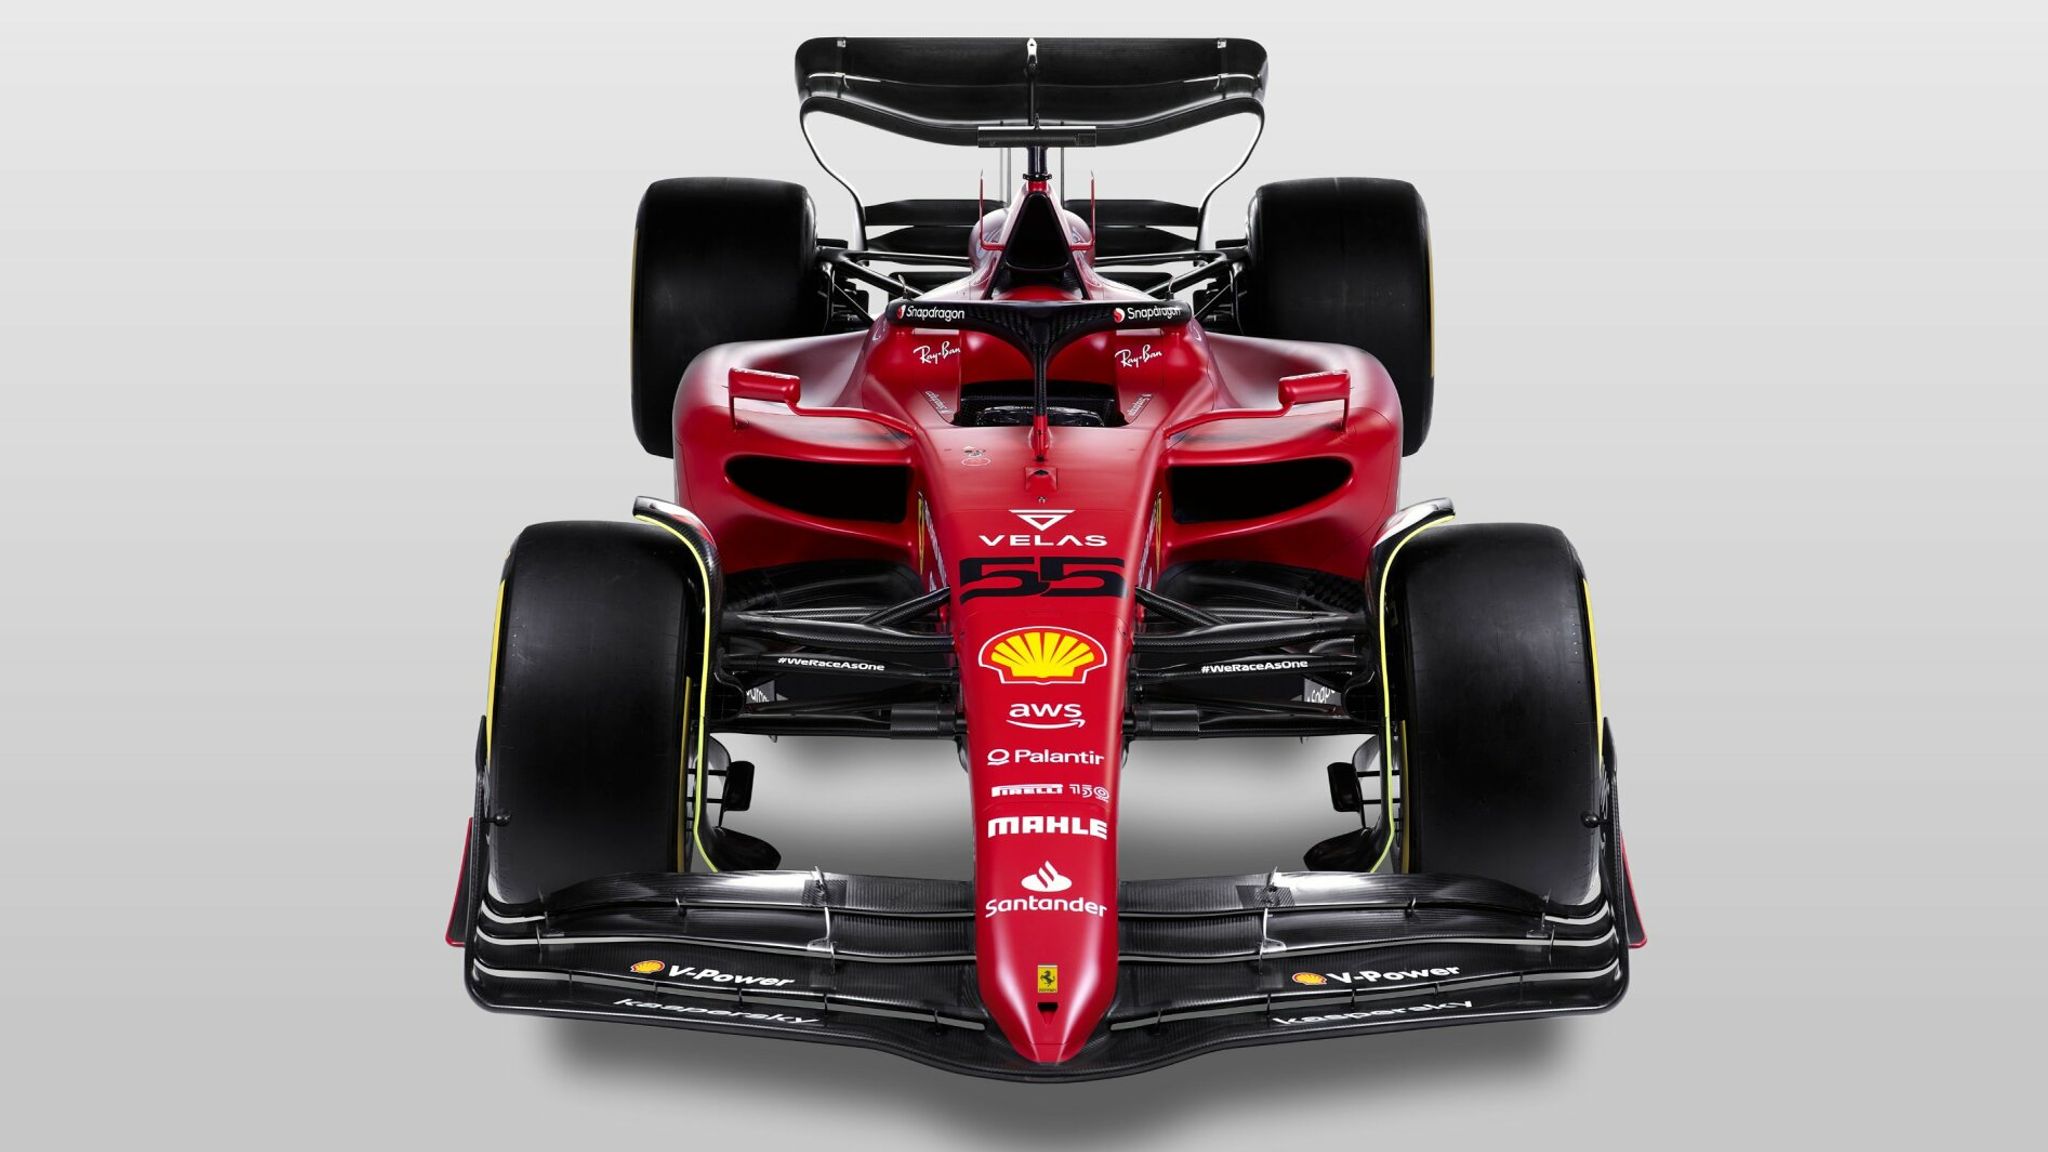 Ferrari reveal fierce new car for 2022 Formula 1 season as Scuderia bid